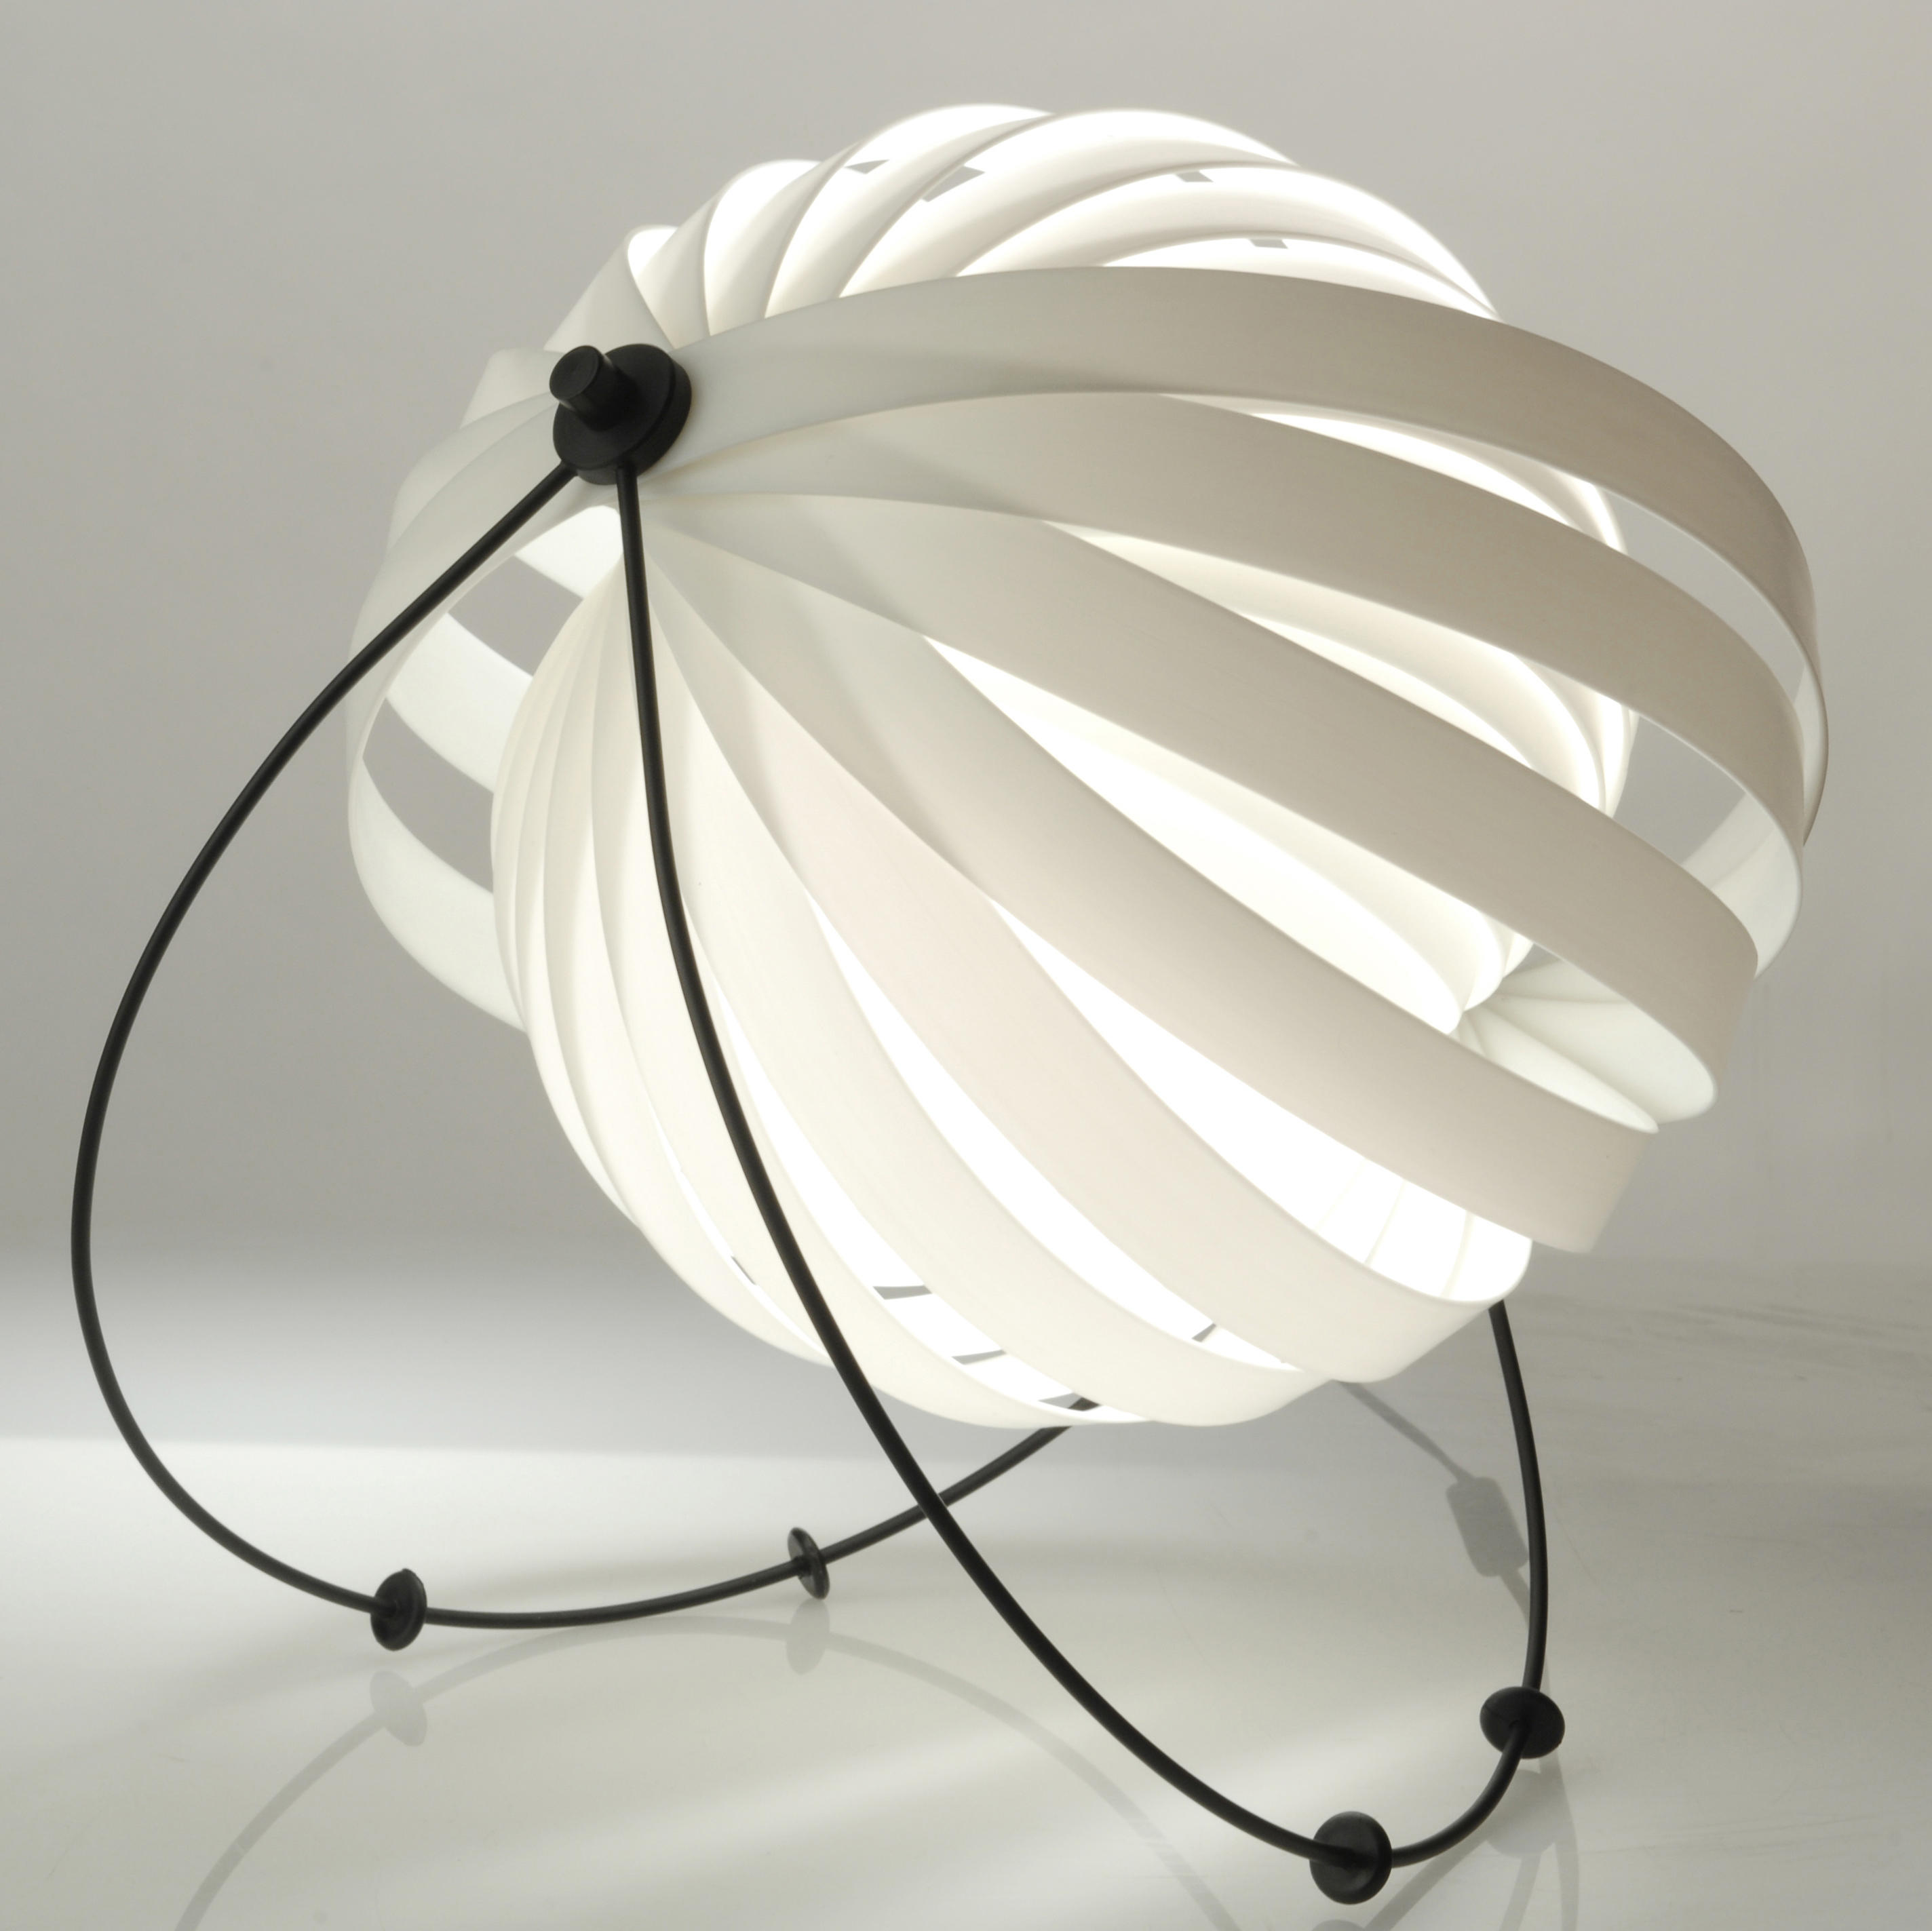 Componist Vul in decaan Eclipse Floor lamp & designer furniture | Architonic